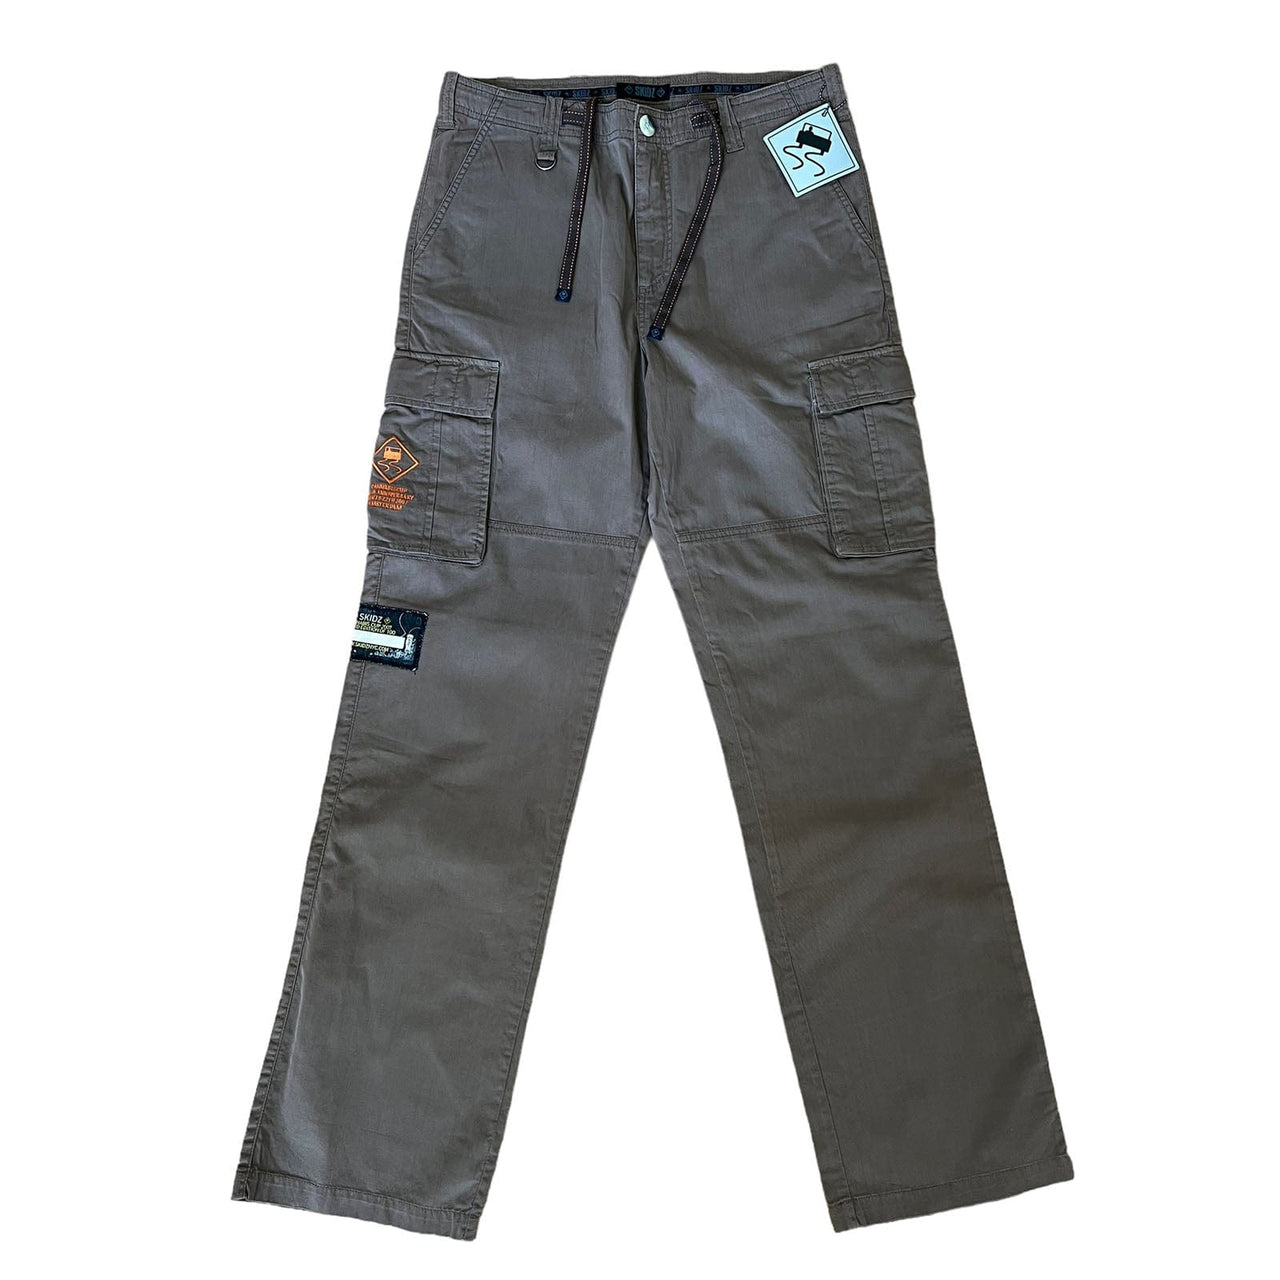 SKIDZ Pants Super Stash Cargo Pants - 2007 CC Brown